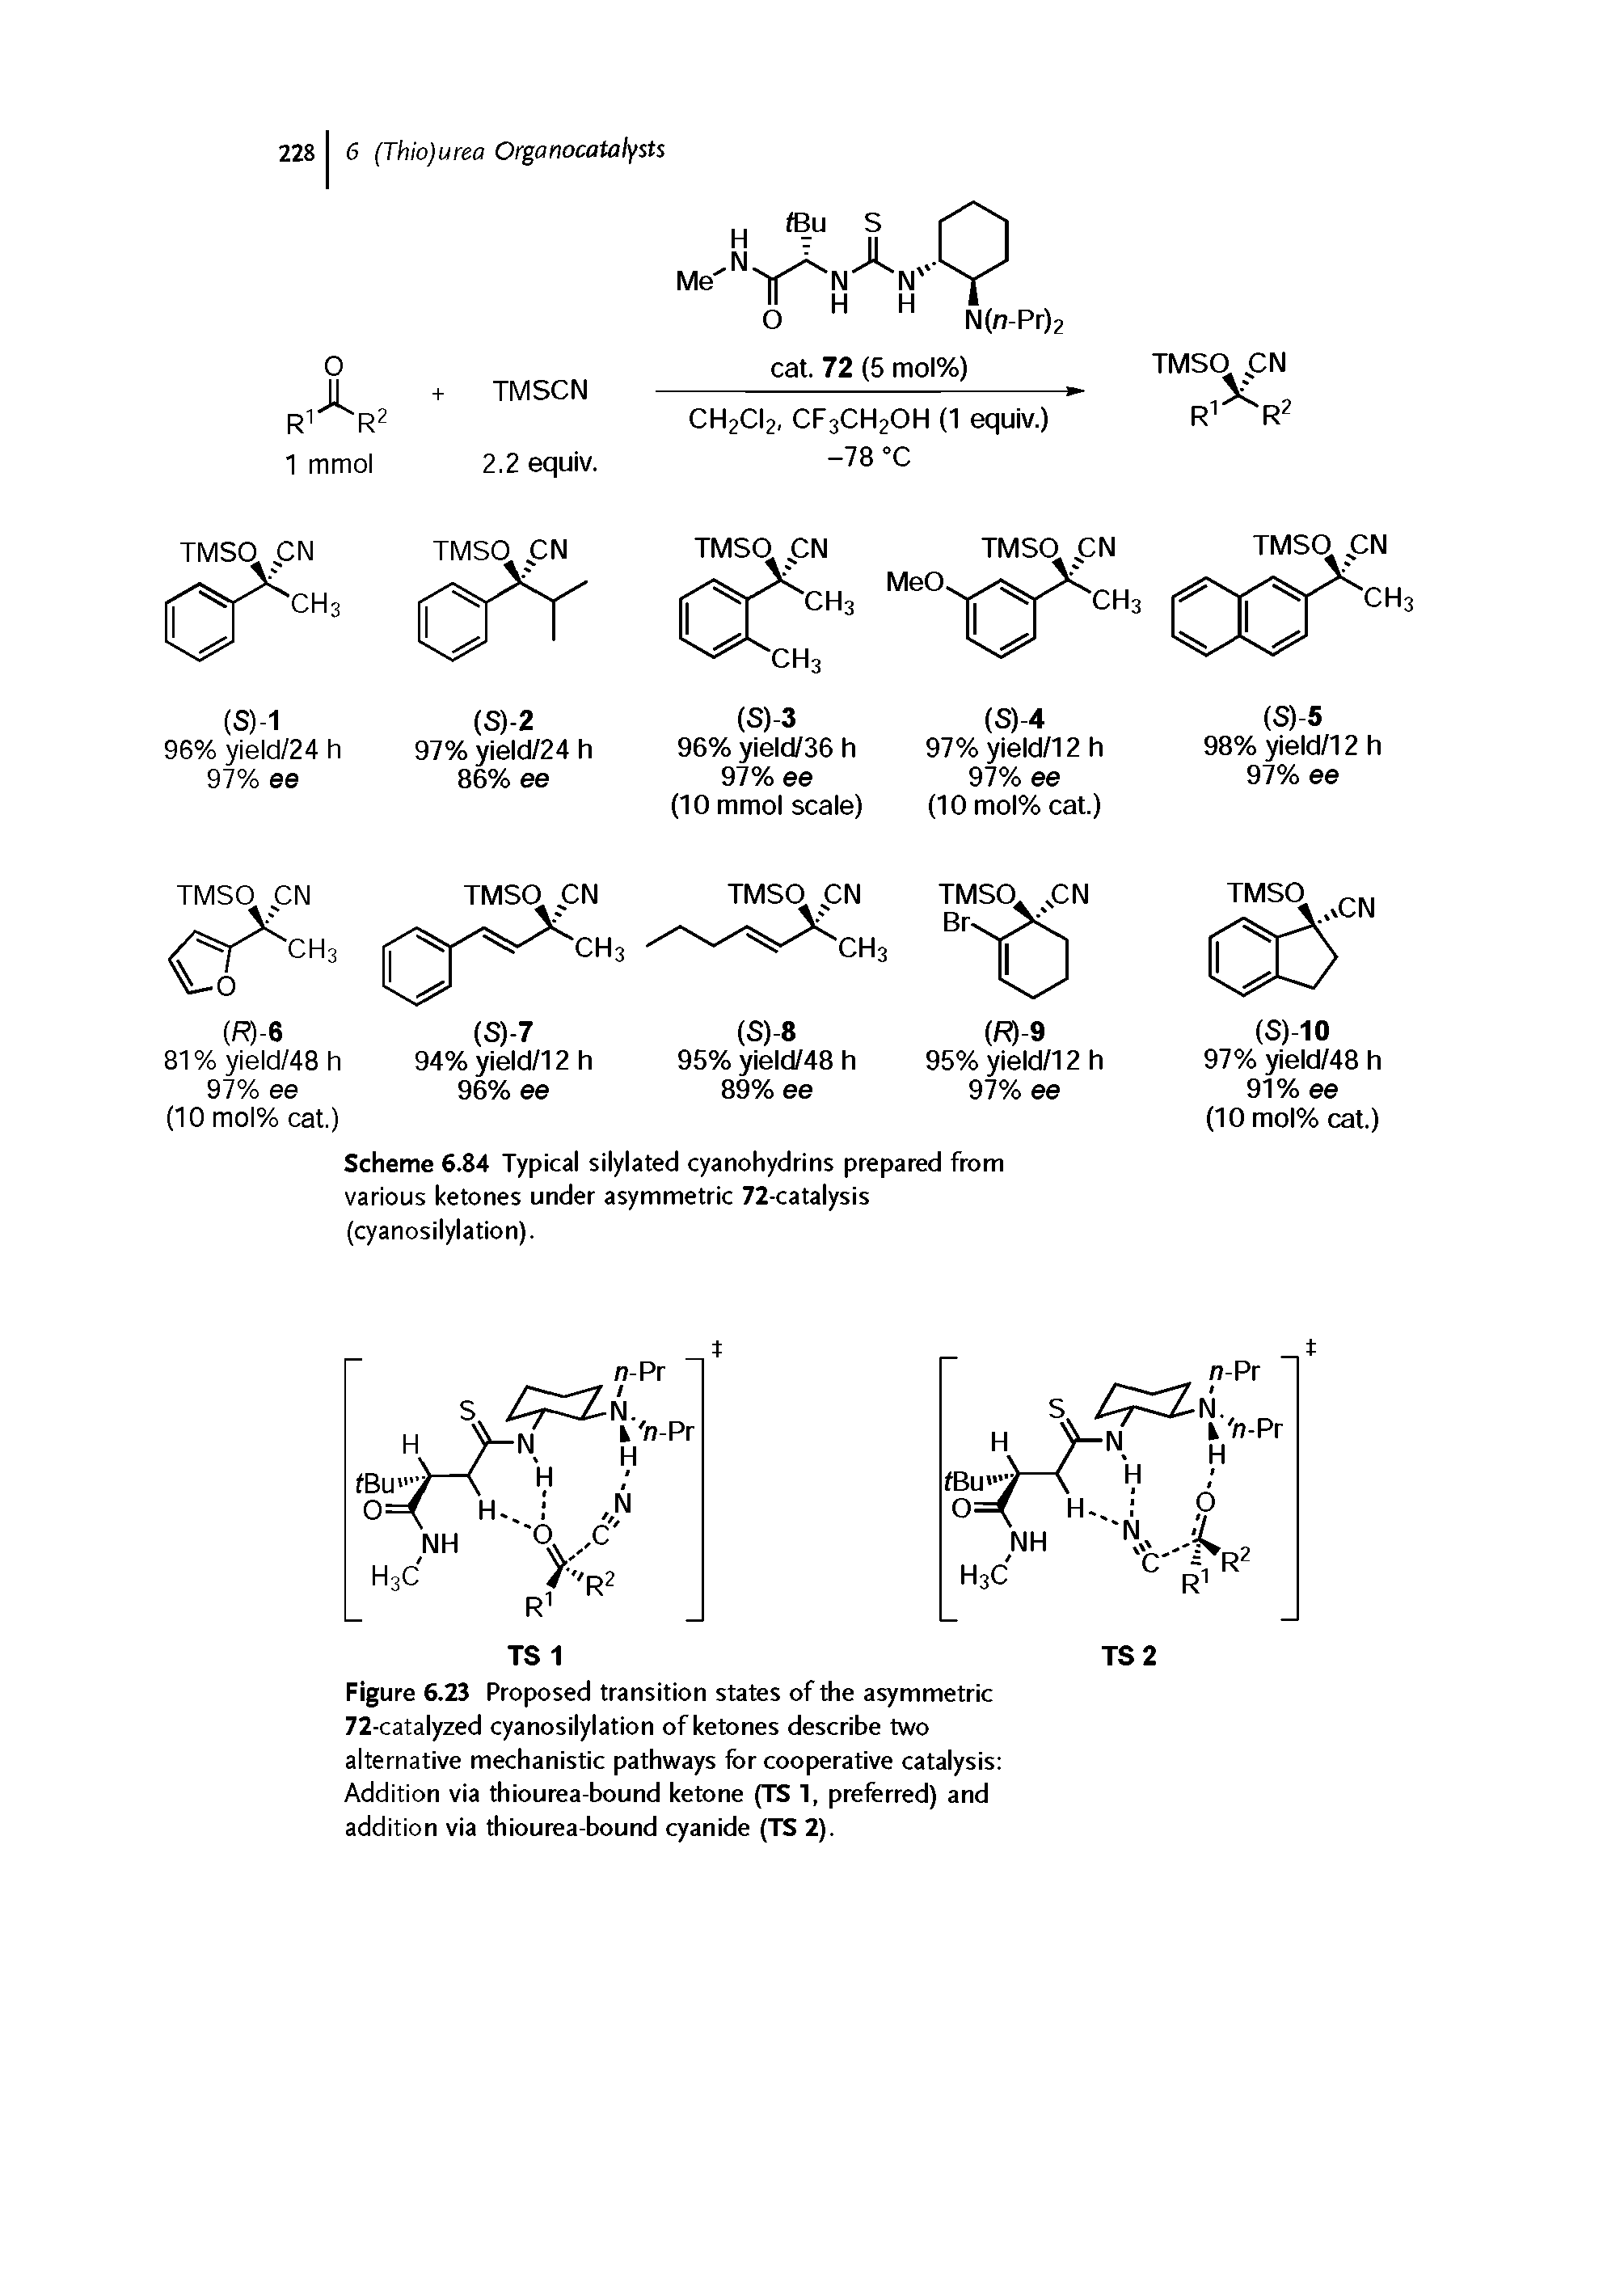 Scheme 6.84 Typical silylated cyanohydrins prepared from various ketones under asymmetric 72-catalysis (cyanosilylation).